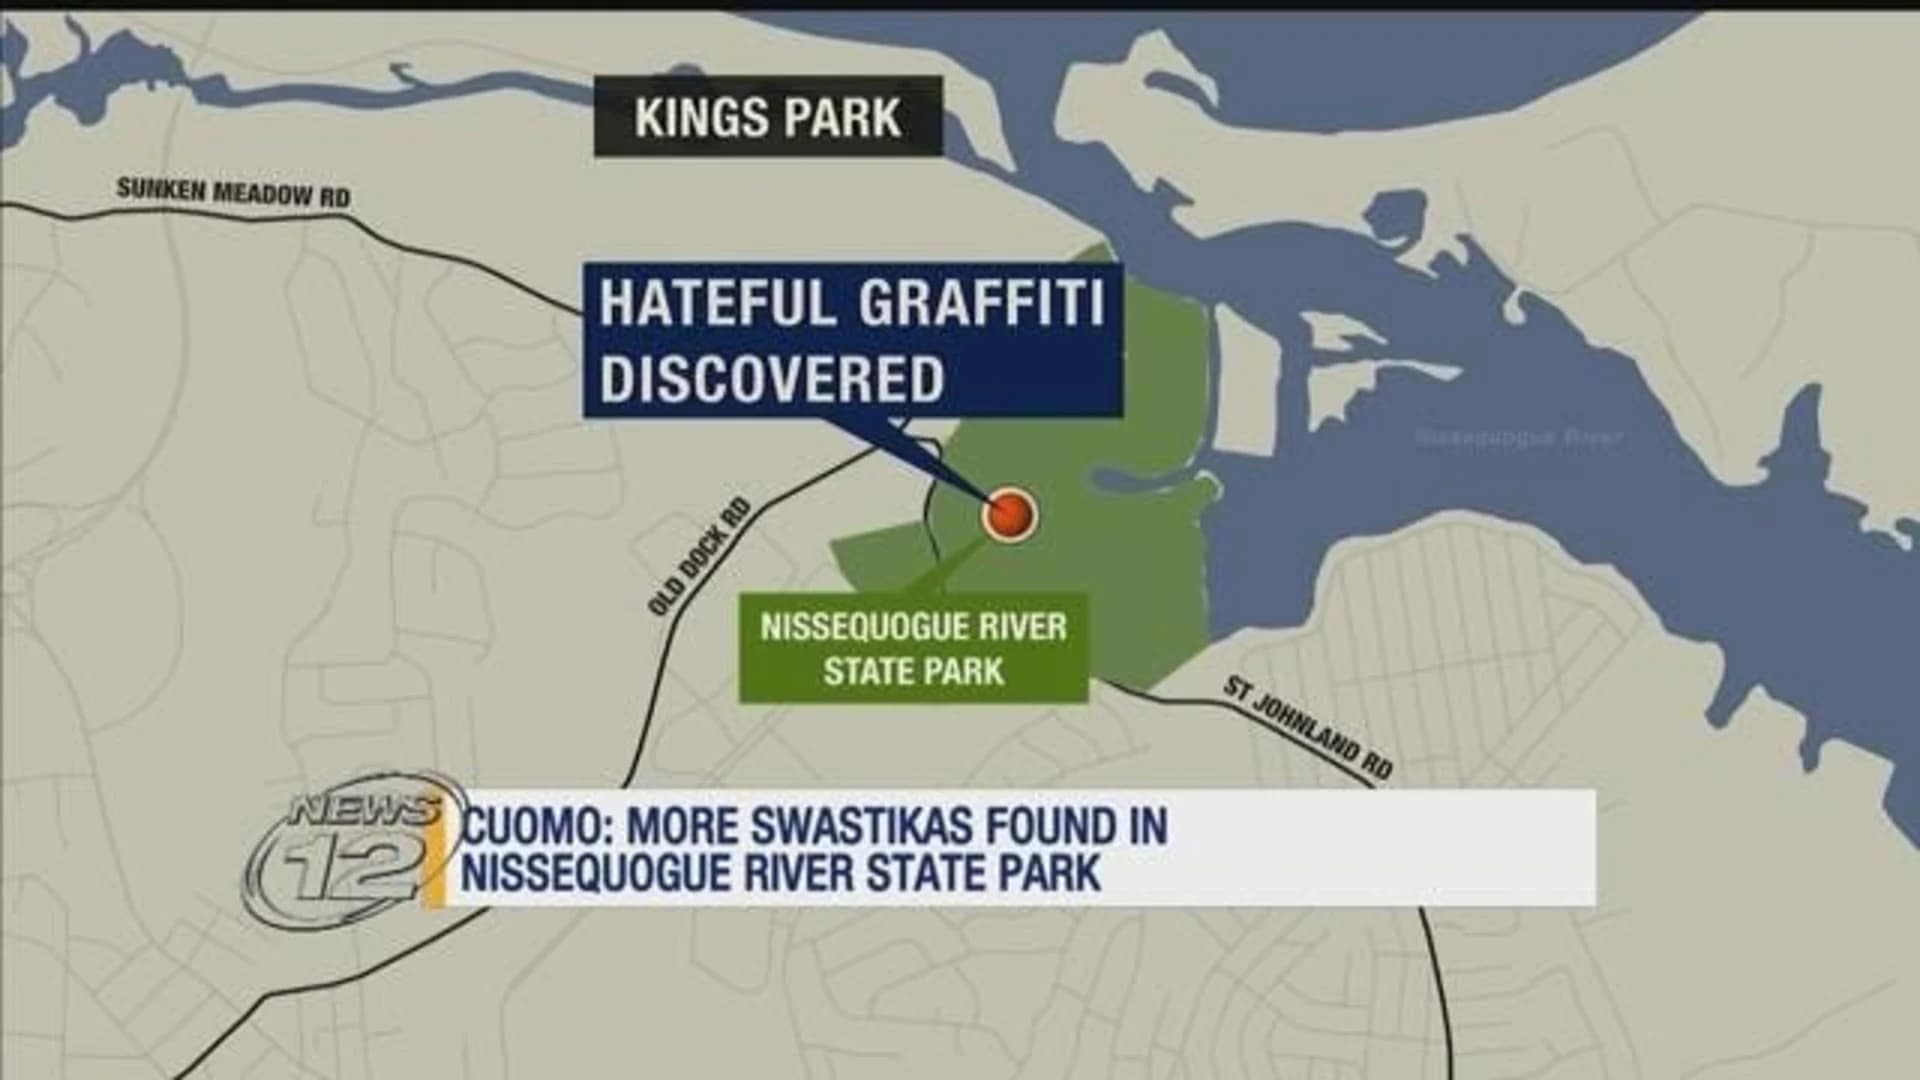 Cuomo: More swastikas found at Nissequogue River State Park